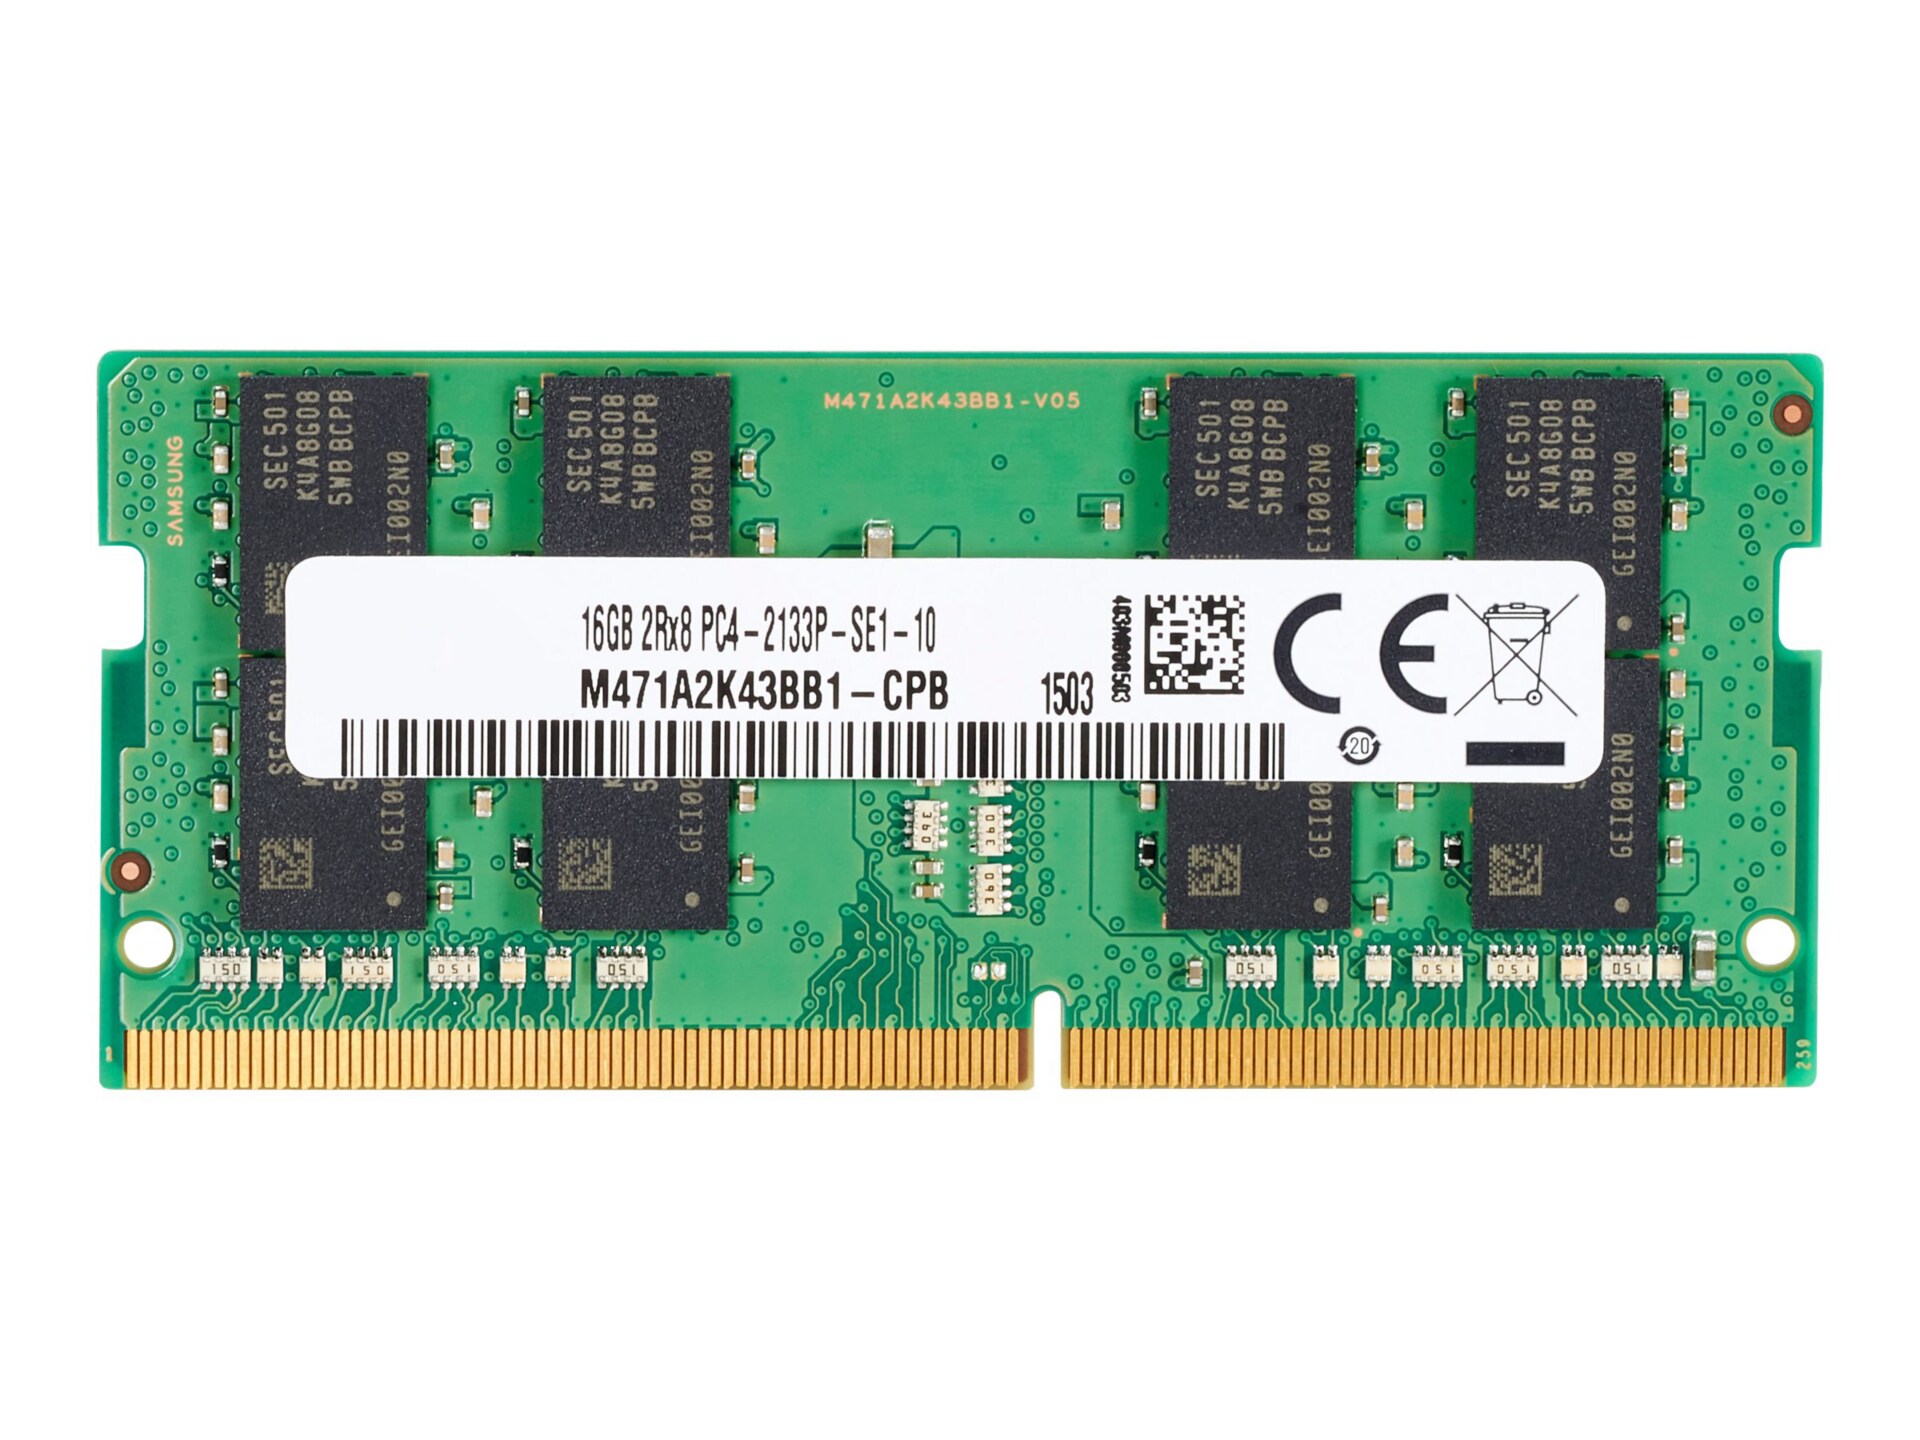 HP - DDR4 - 8 GB - DIMM 288-pin - registered